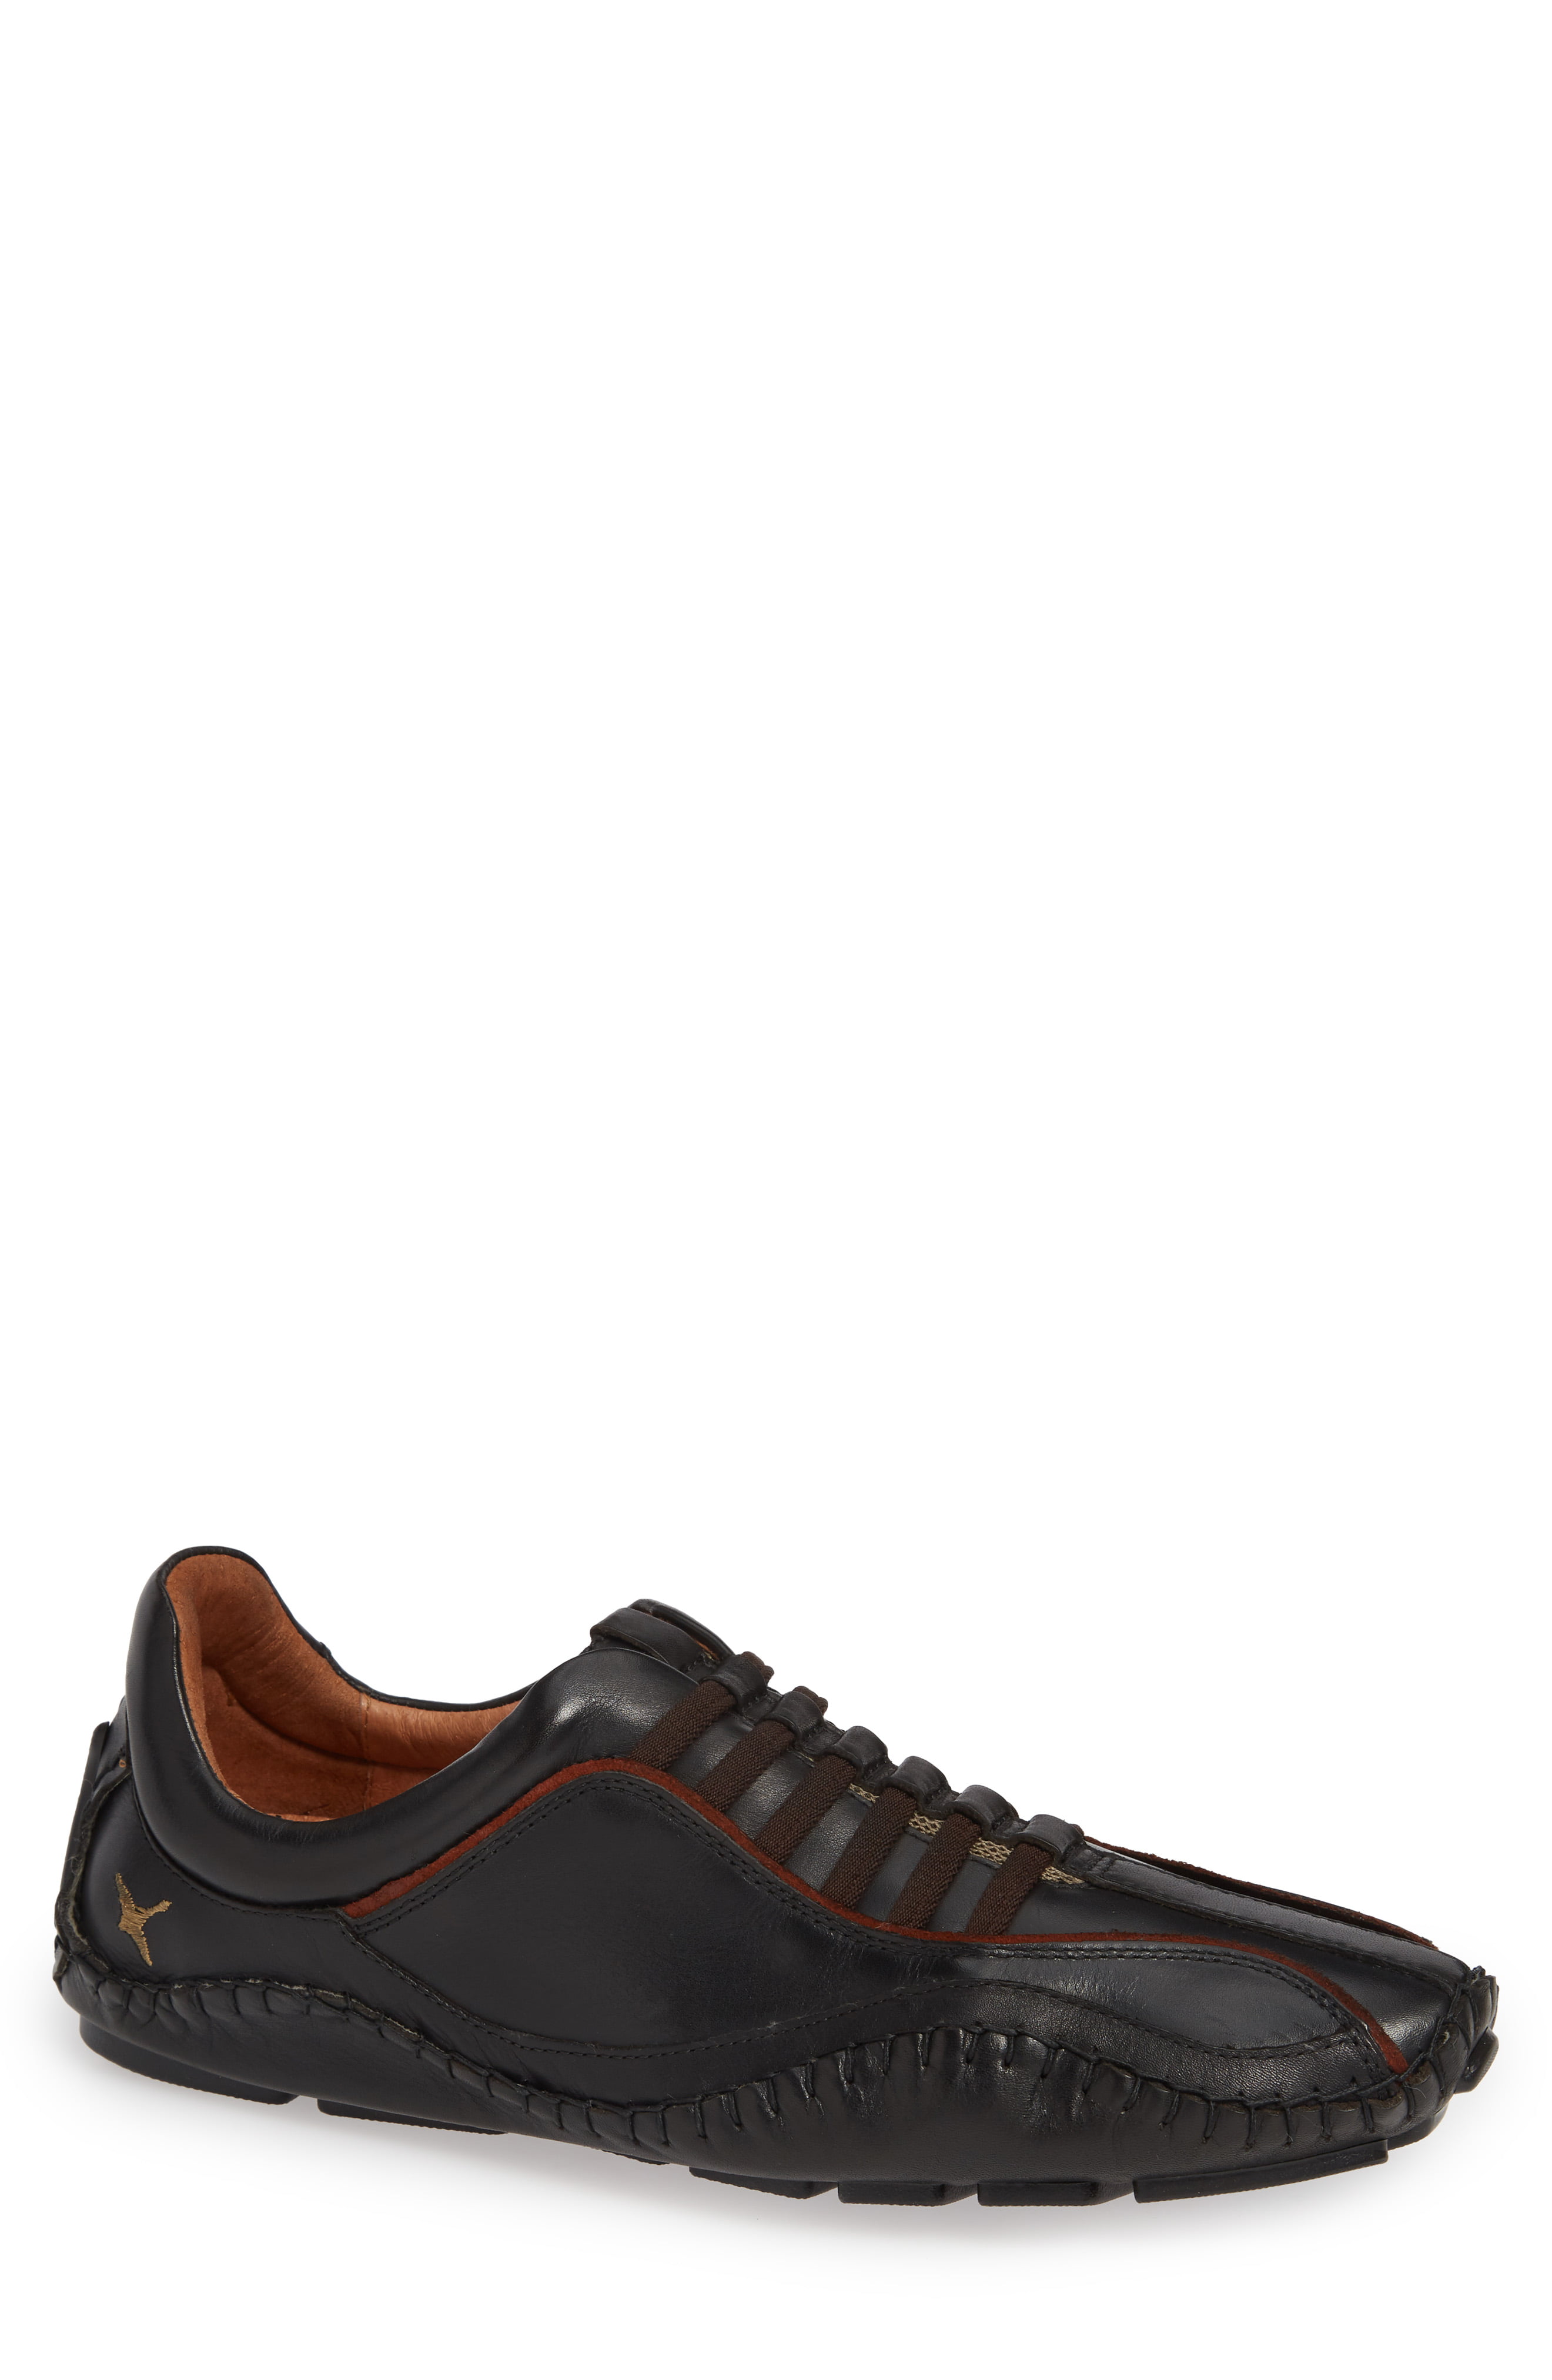 Pikolinos Men's Fuencarral 15A-6175 Shoe,Black,41 EU/7.5-8 M US